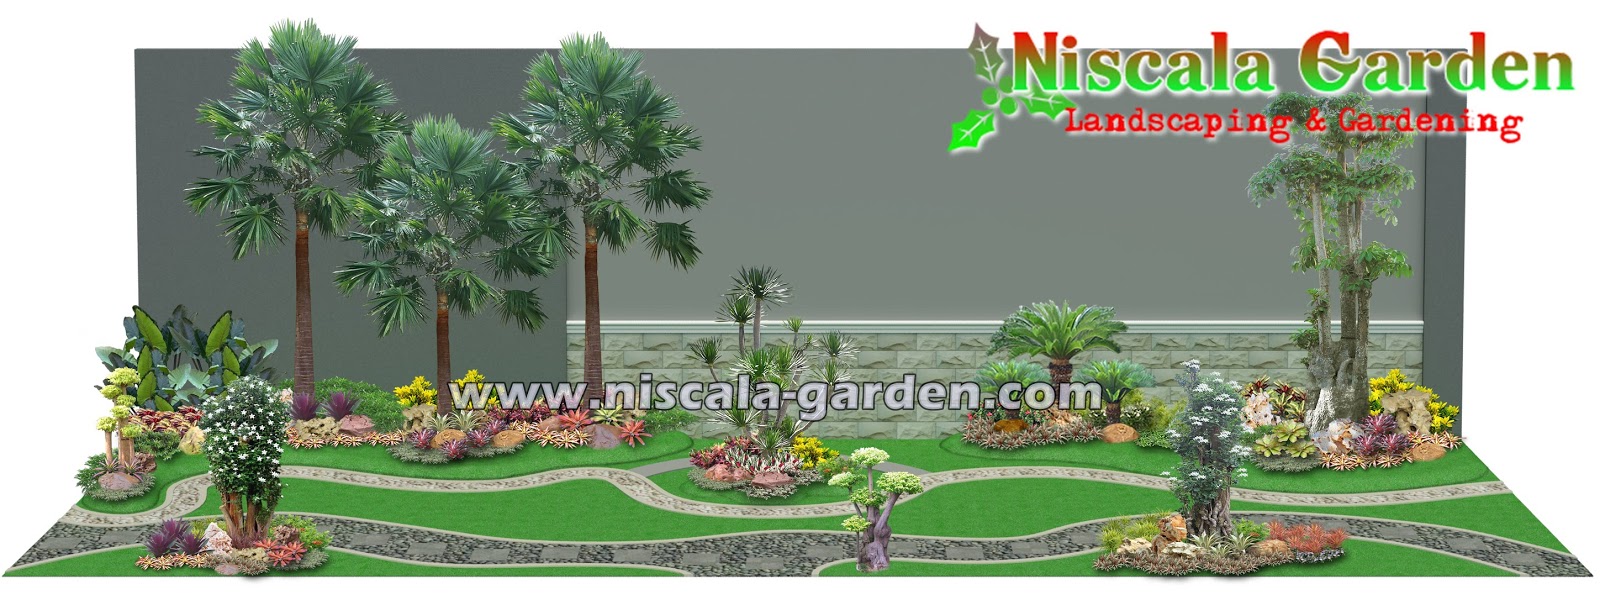 45 Desain Taman Tropis Modern Jasa Tukang Taman Surabaya 